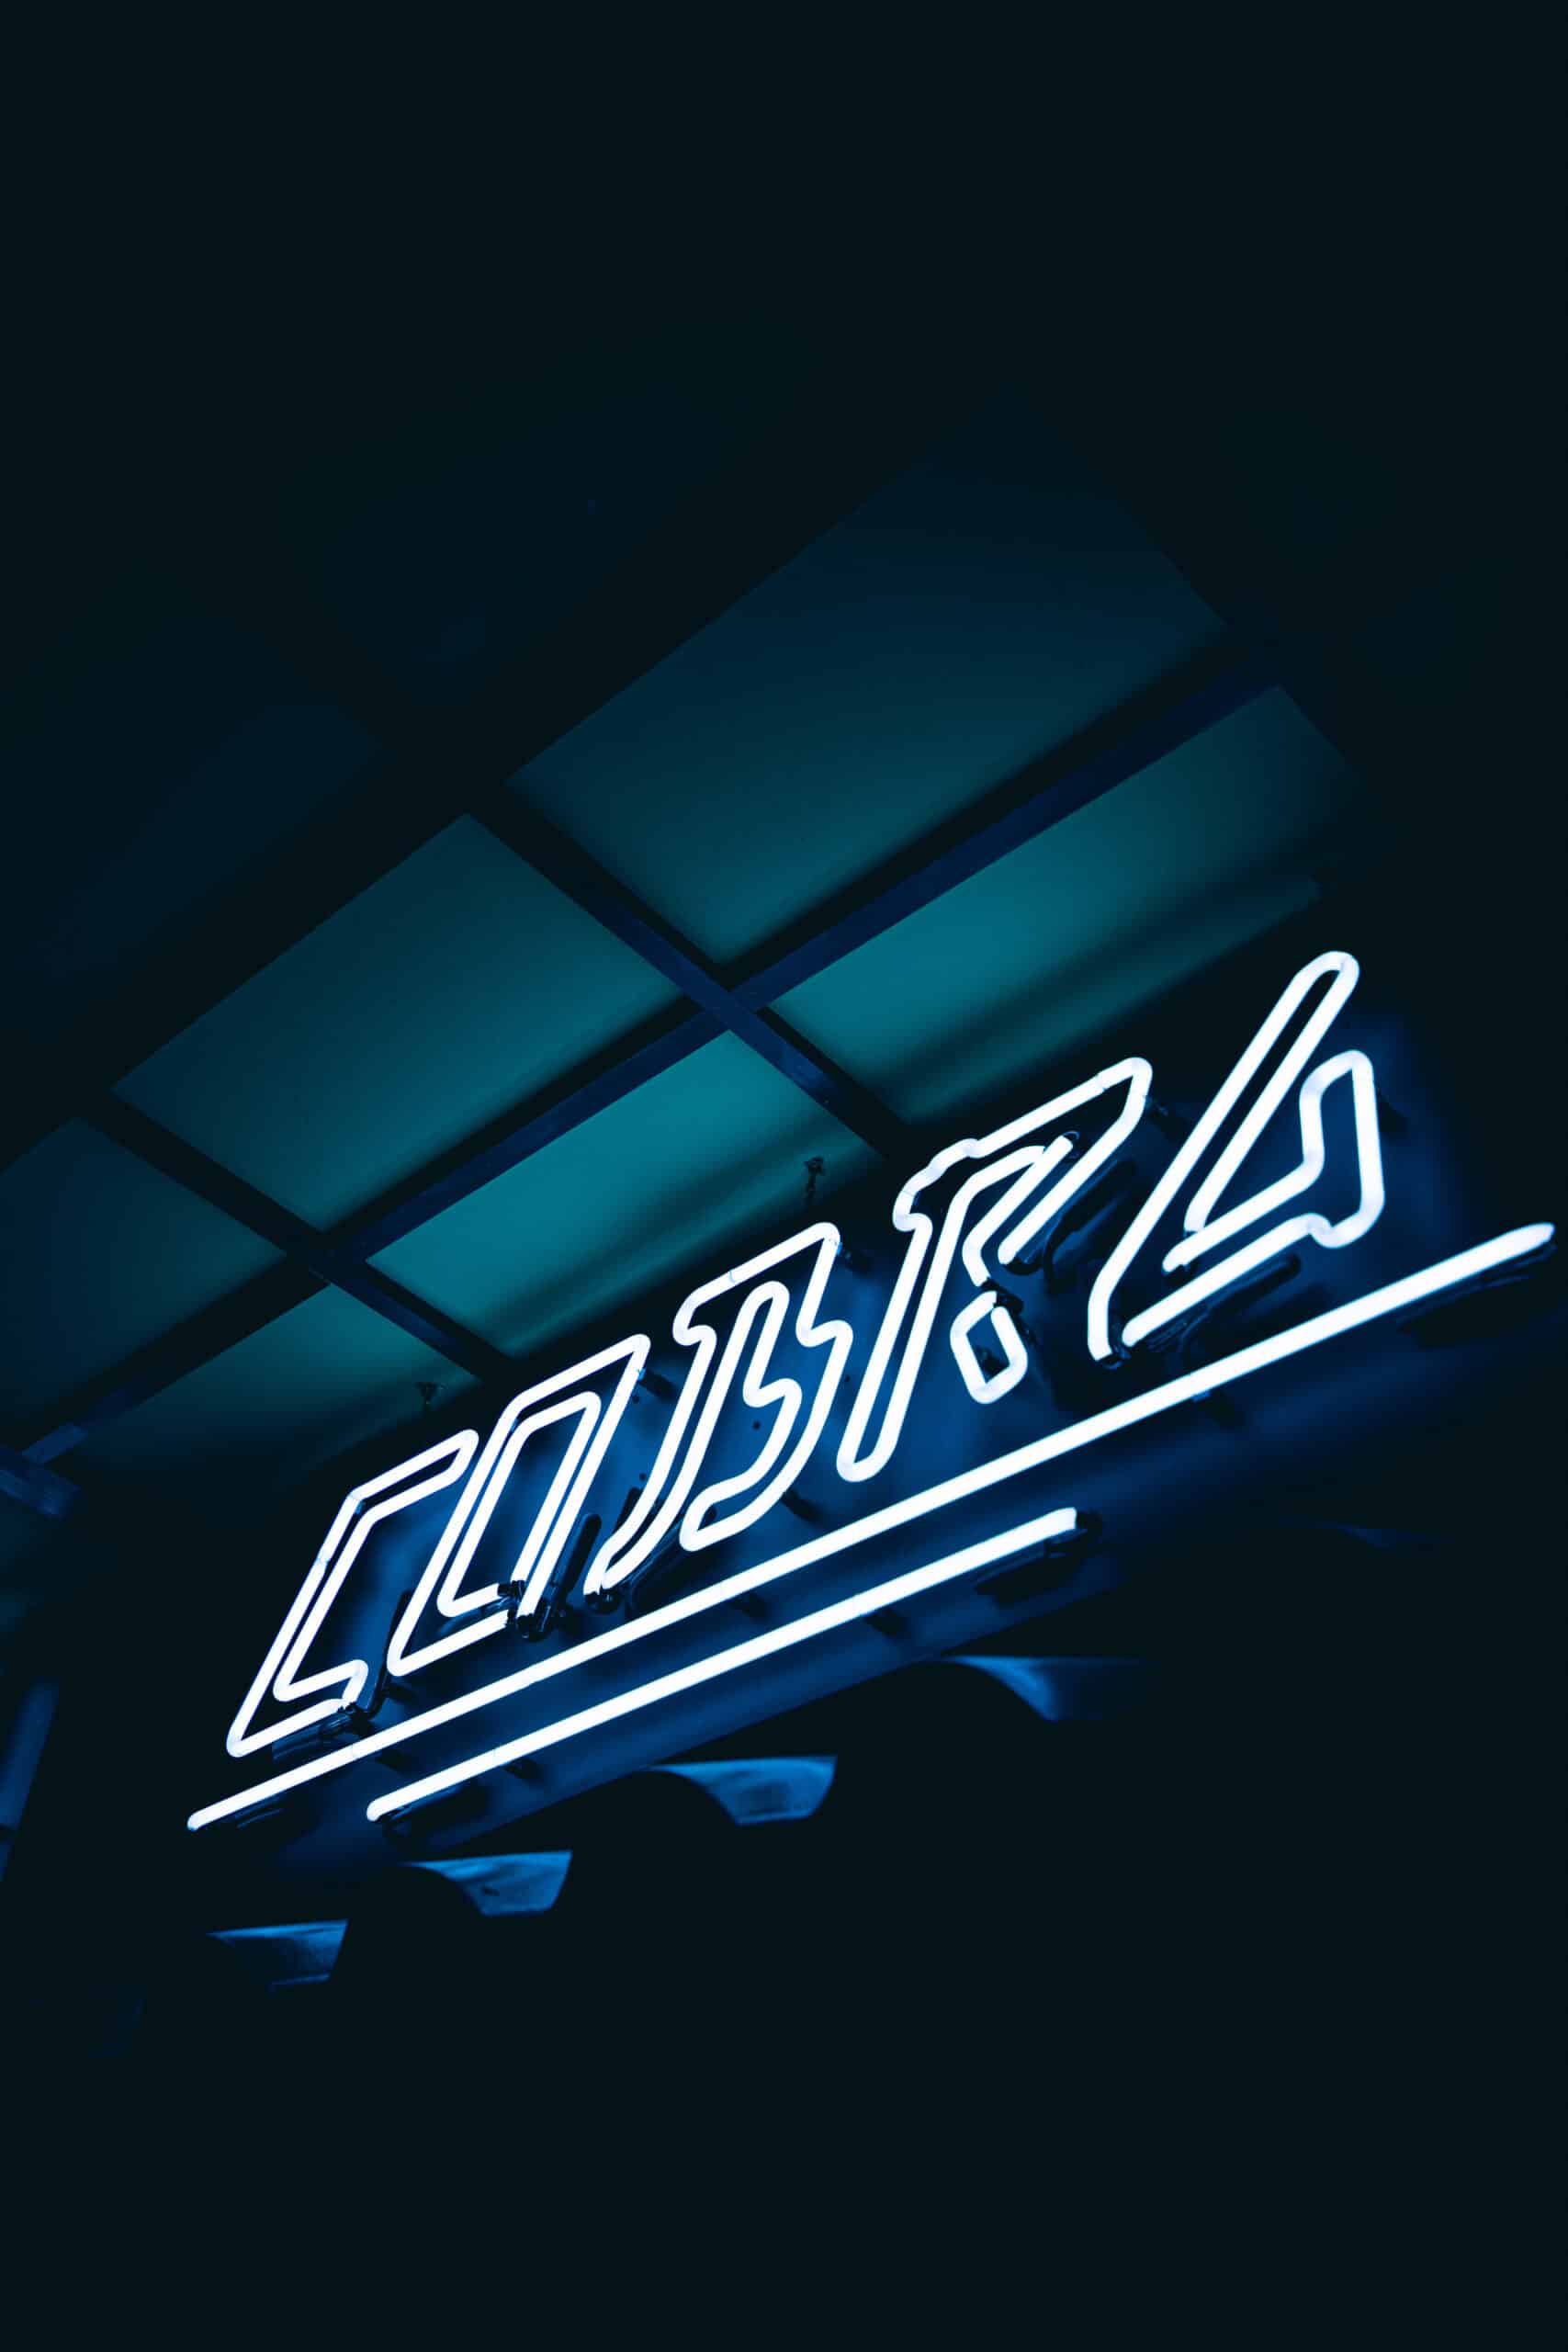 cobra lounge neon sign